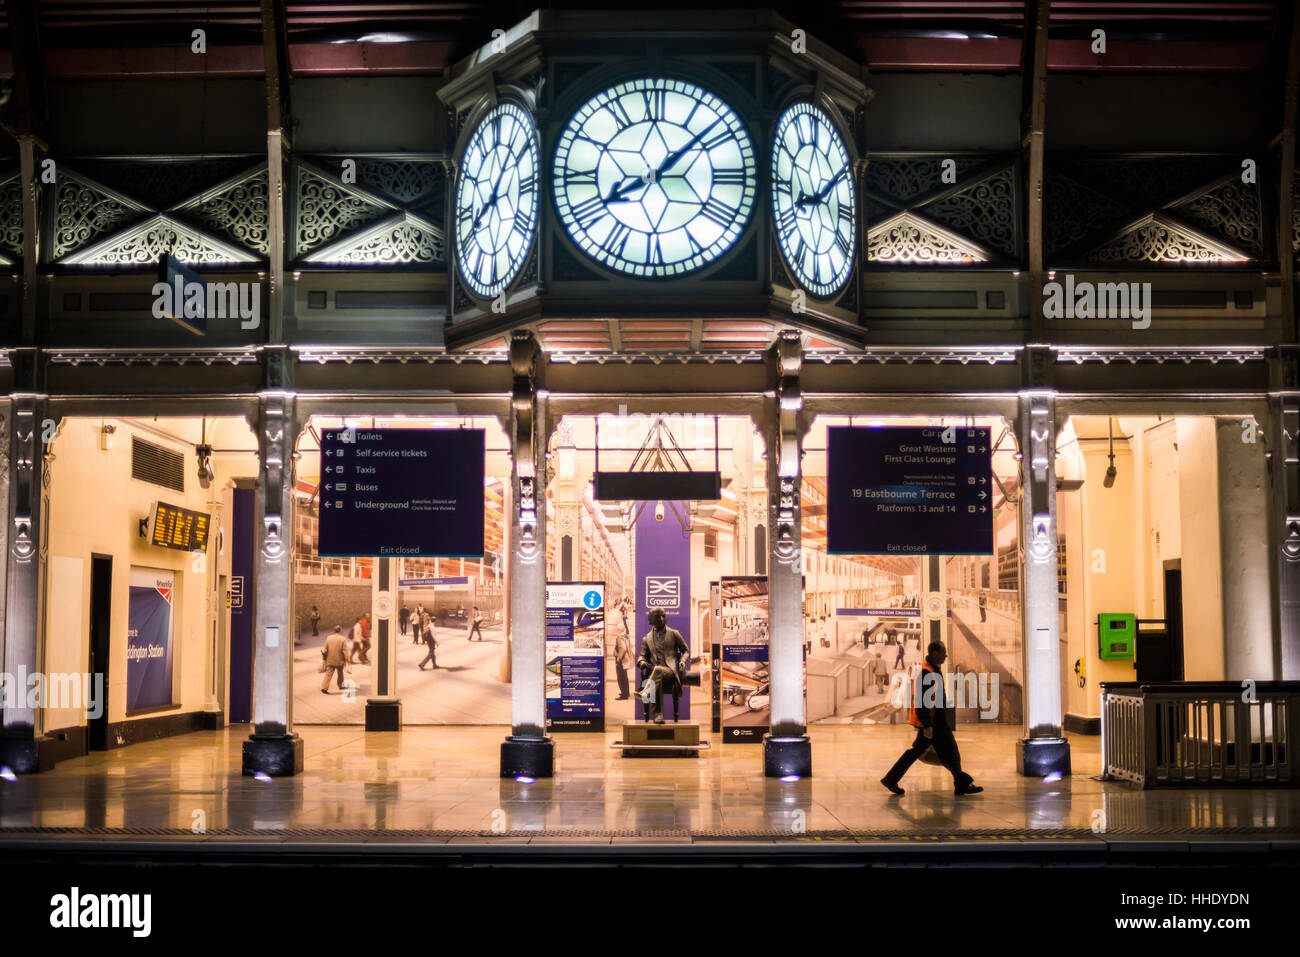 Die Uhr, Paddington Station, Stadtteil Westminster, London, UK  Stockfotografie - Alamy